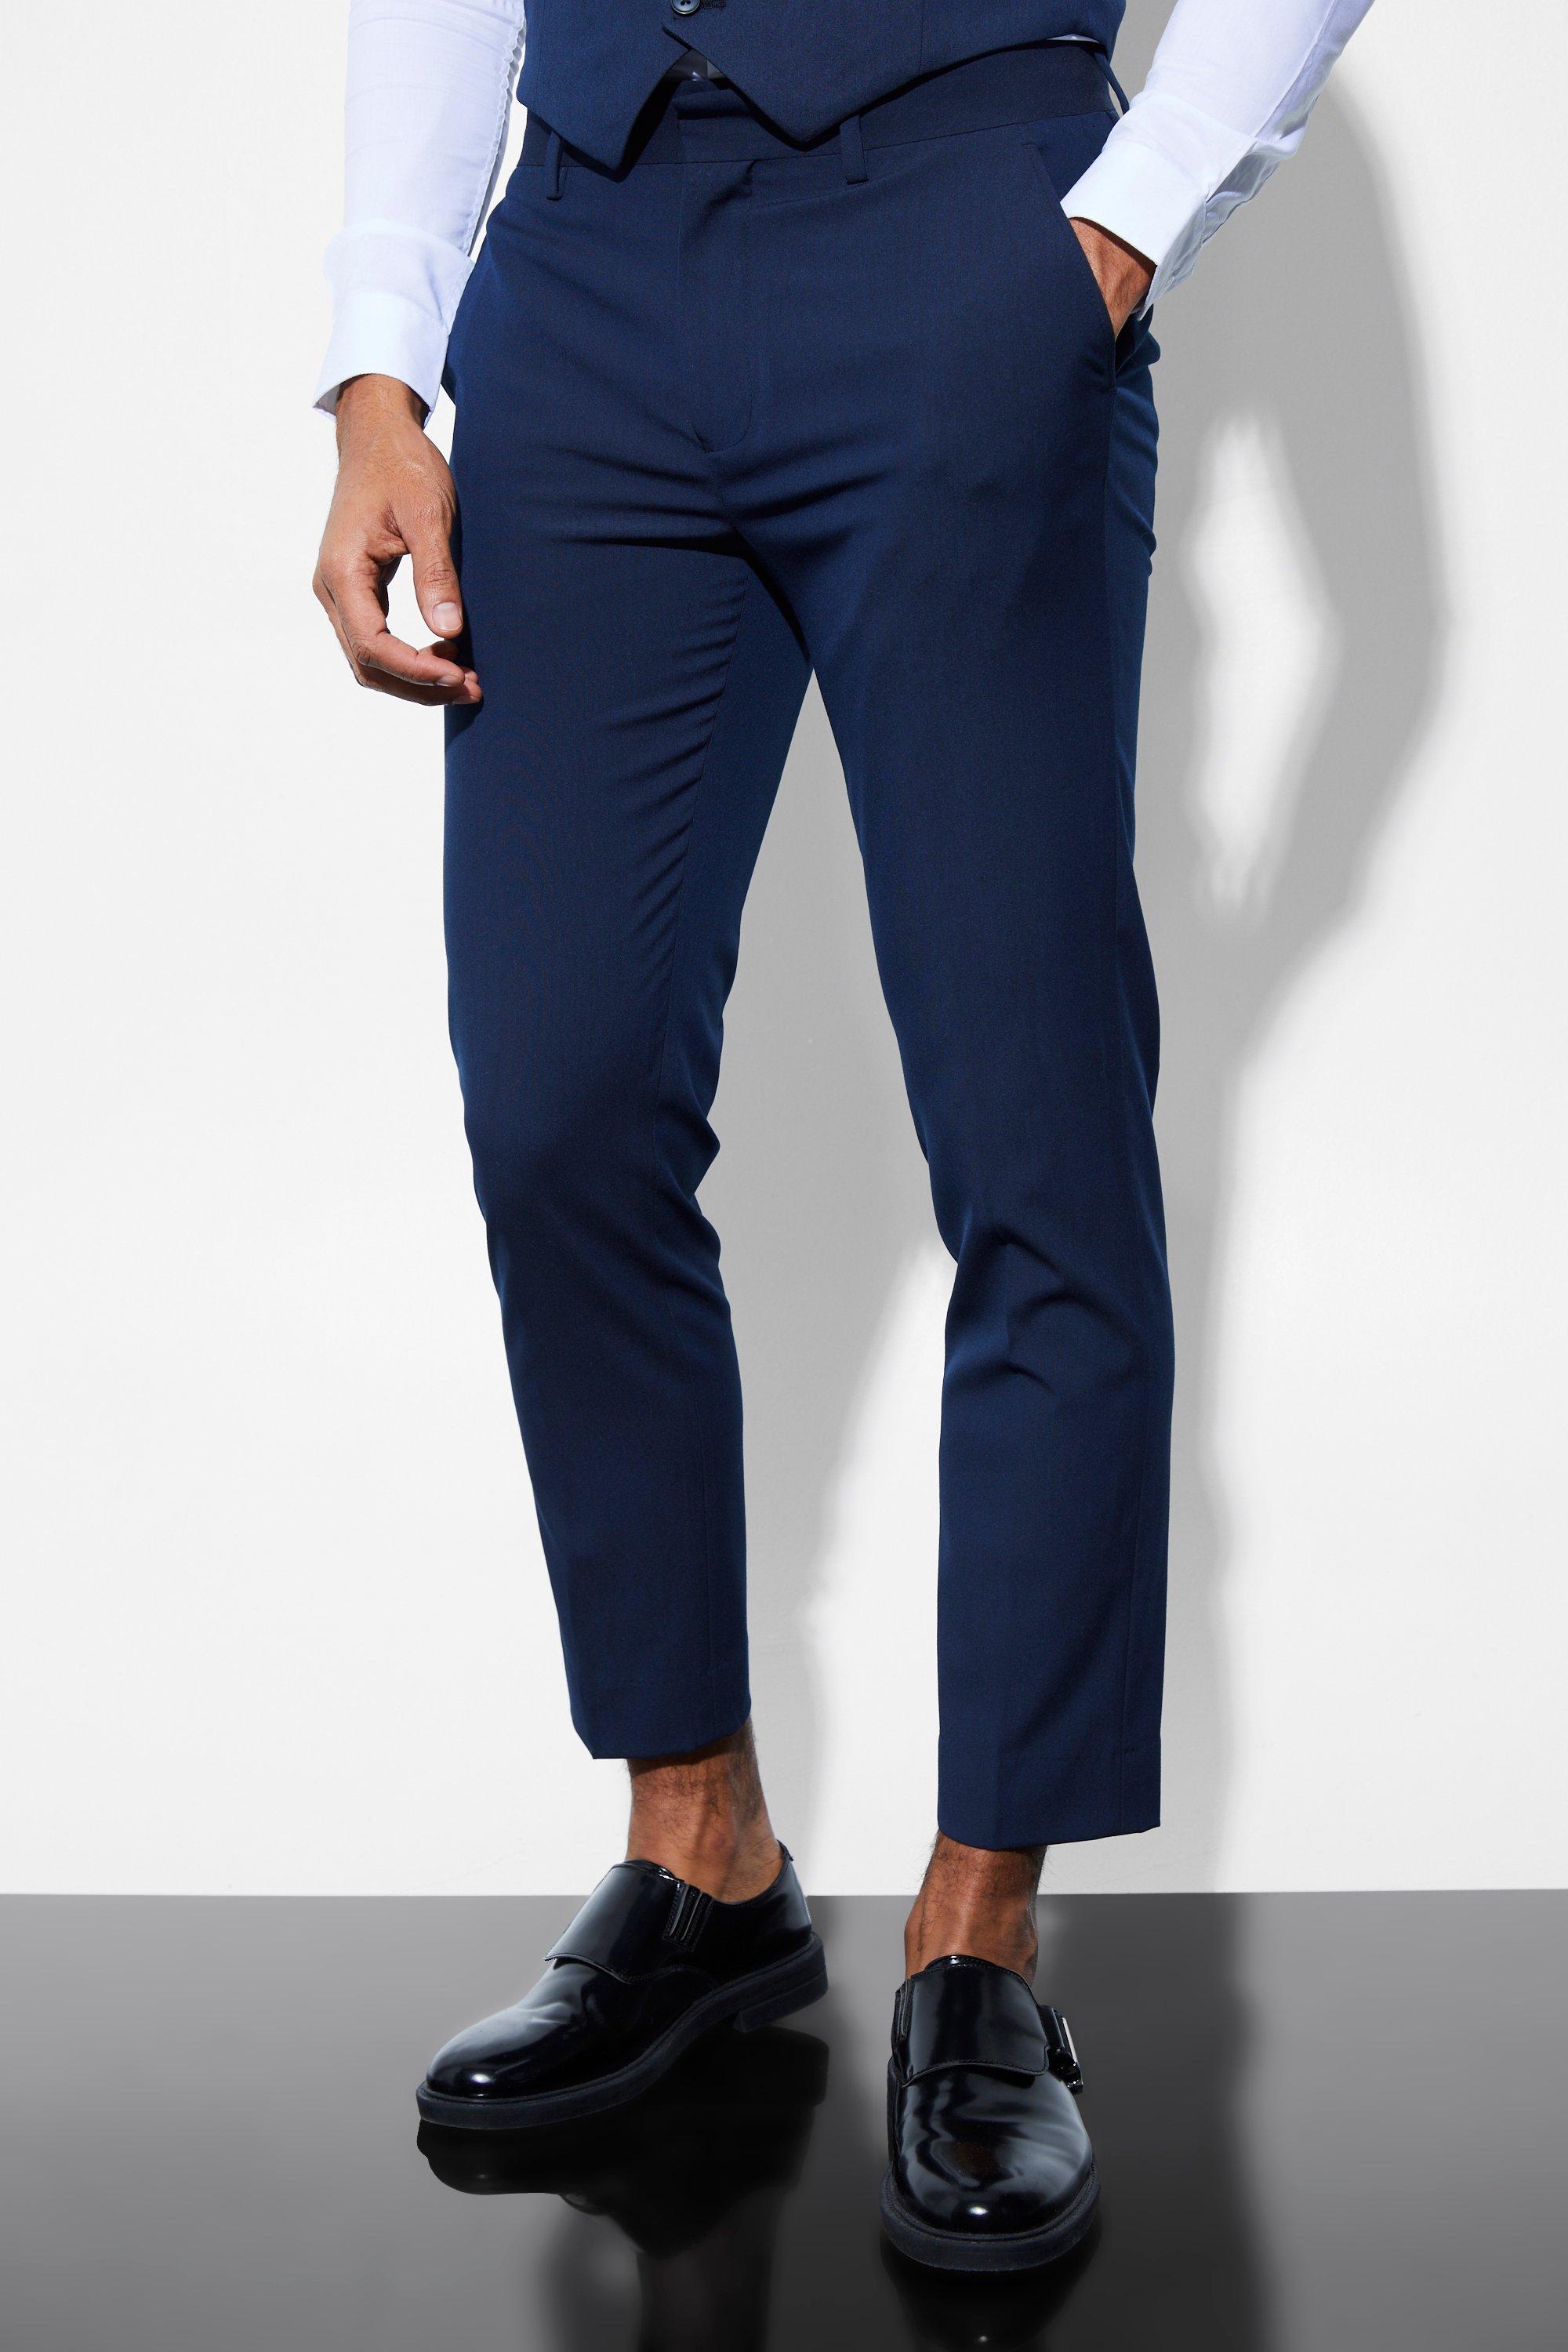 pantalon de costume skinny court homme - bleu - 32r, bleu